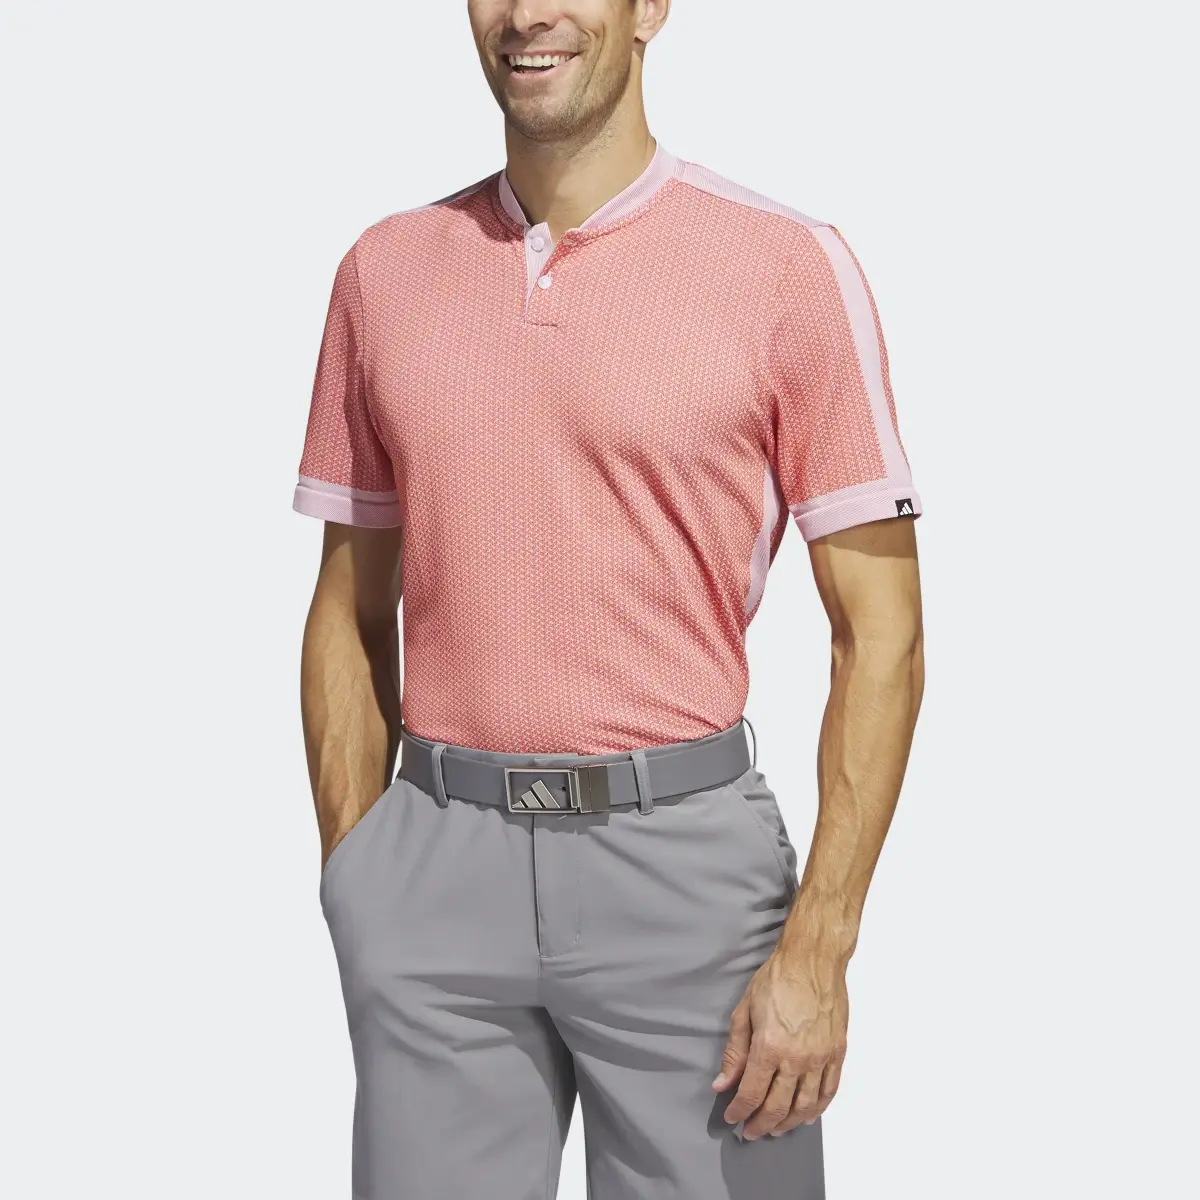 Adidas Ultimate365 Tour Textured PRIMEKNIT Golf Polo Shirt. 1